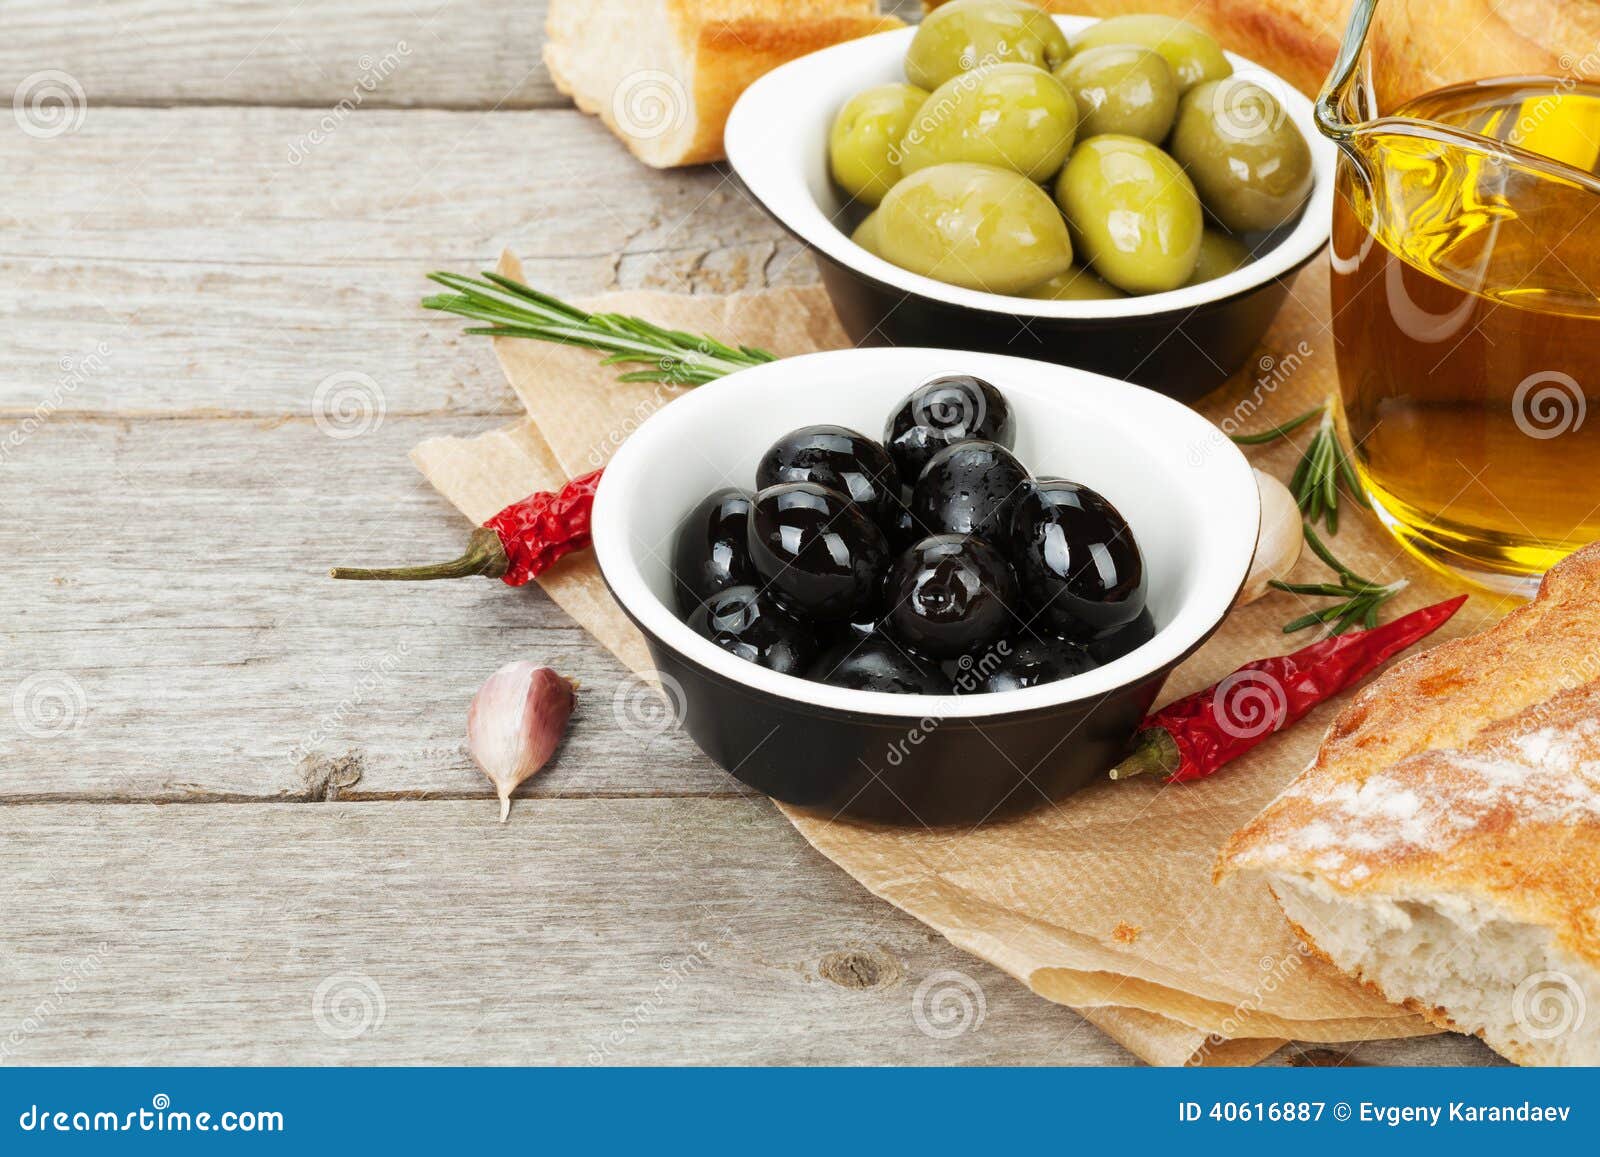 Bread olive oil. Закуски с оливками на деревянном столе. Оливки по деревенски. Острая пища с оливками. Десерты средиземноморской кухни.